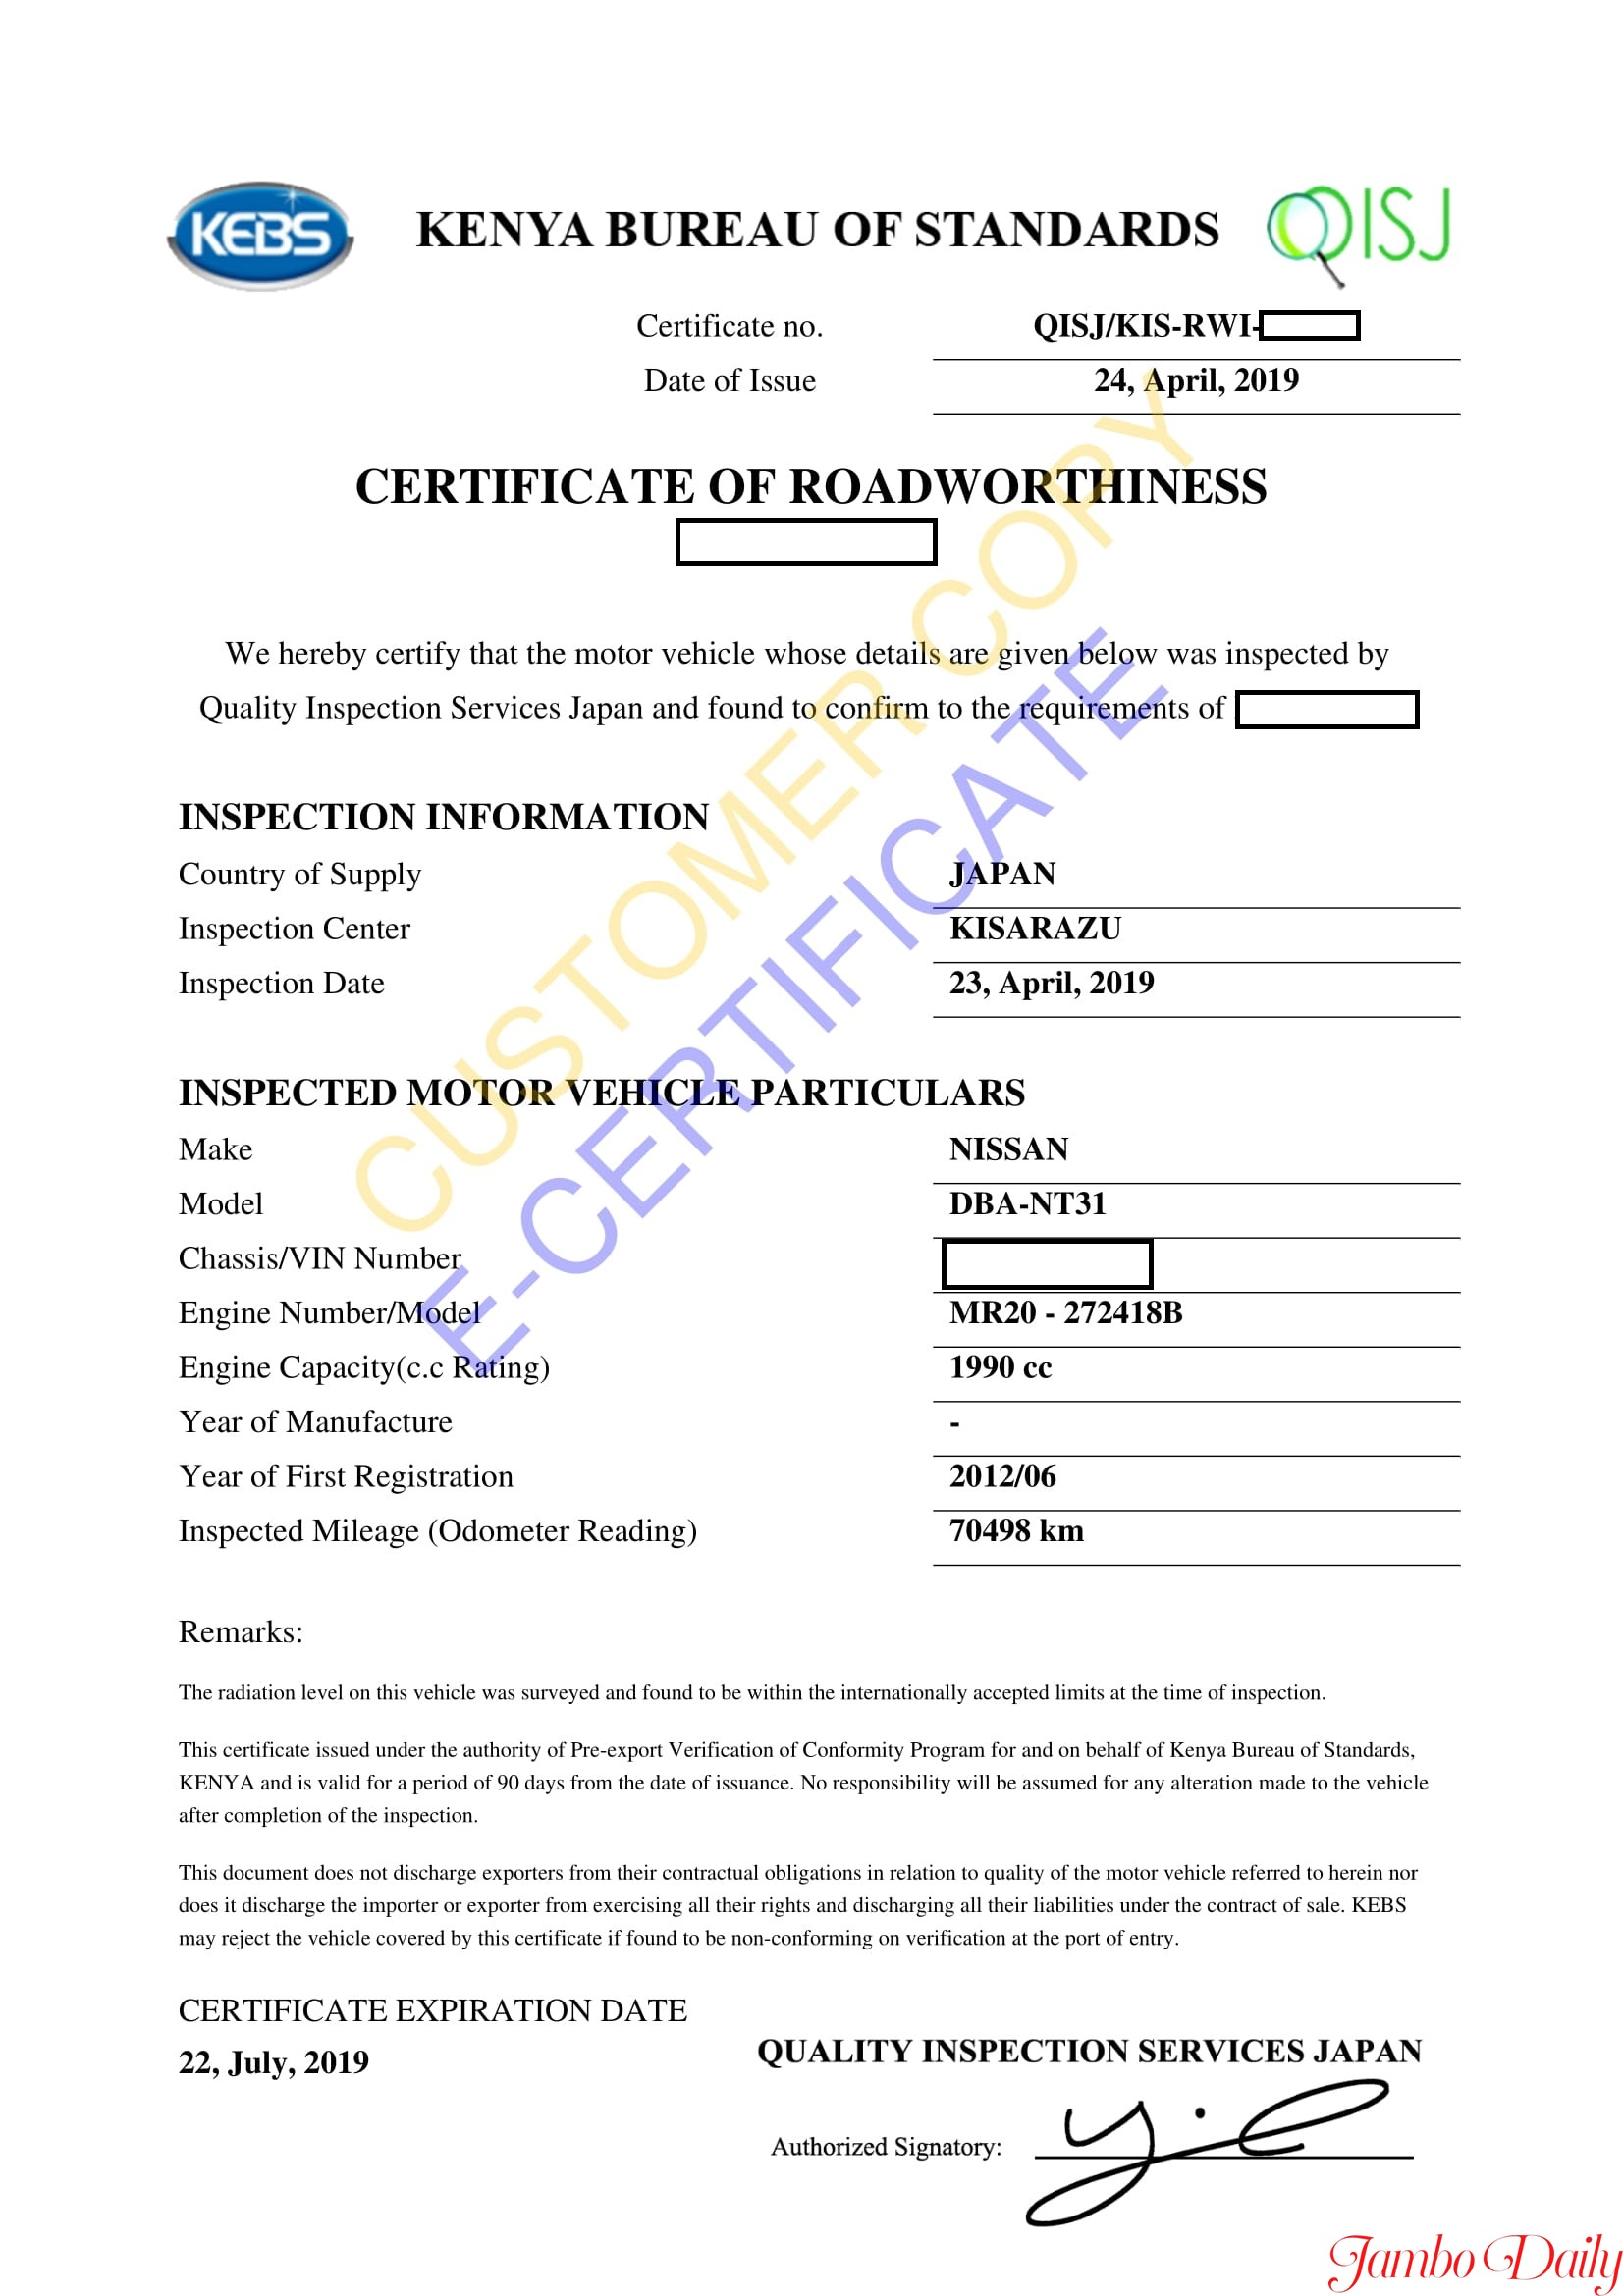 Sample of a Verified QISJ Certificate